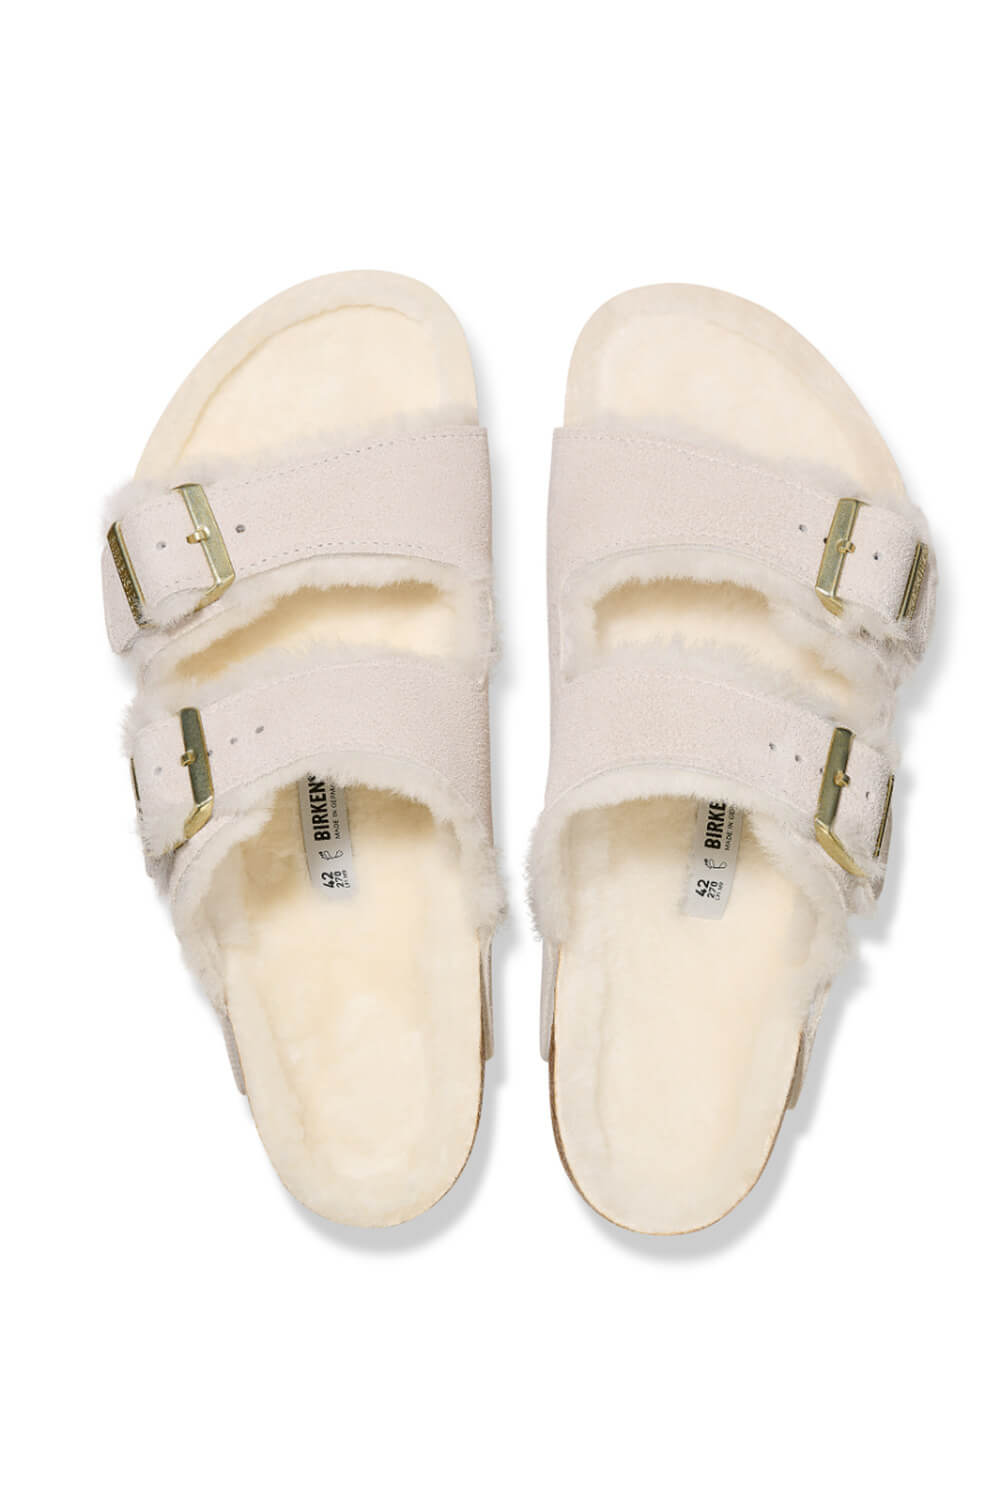 Birkenstock Women's Arizona Shearling Sandals - Plaid White Wool